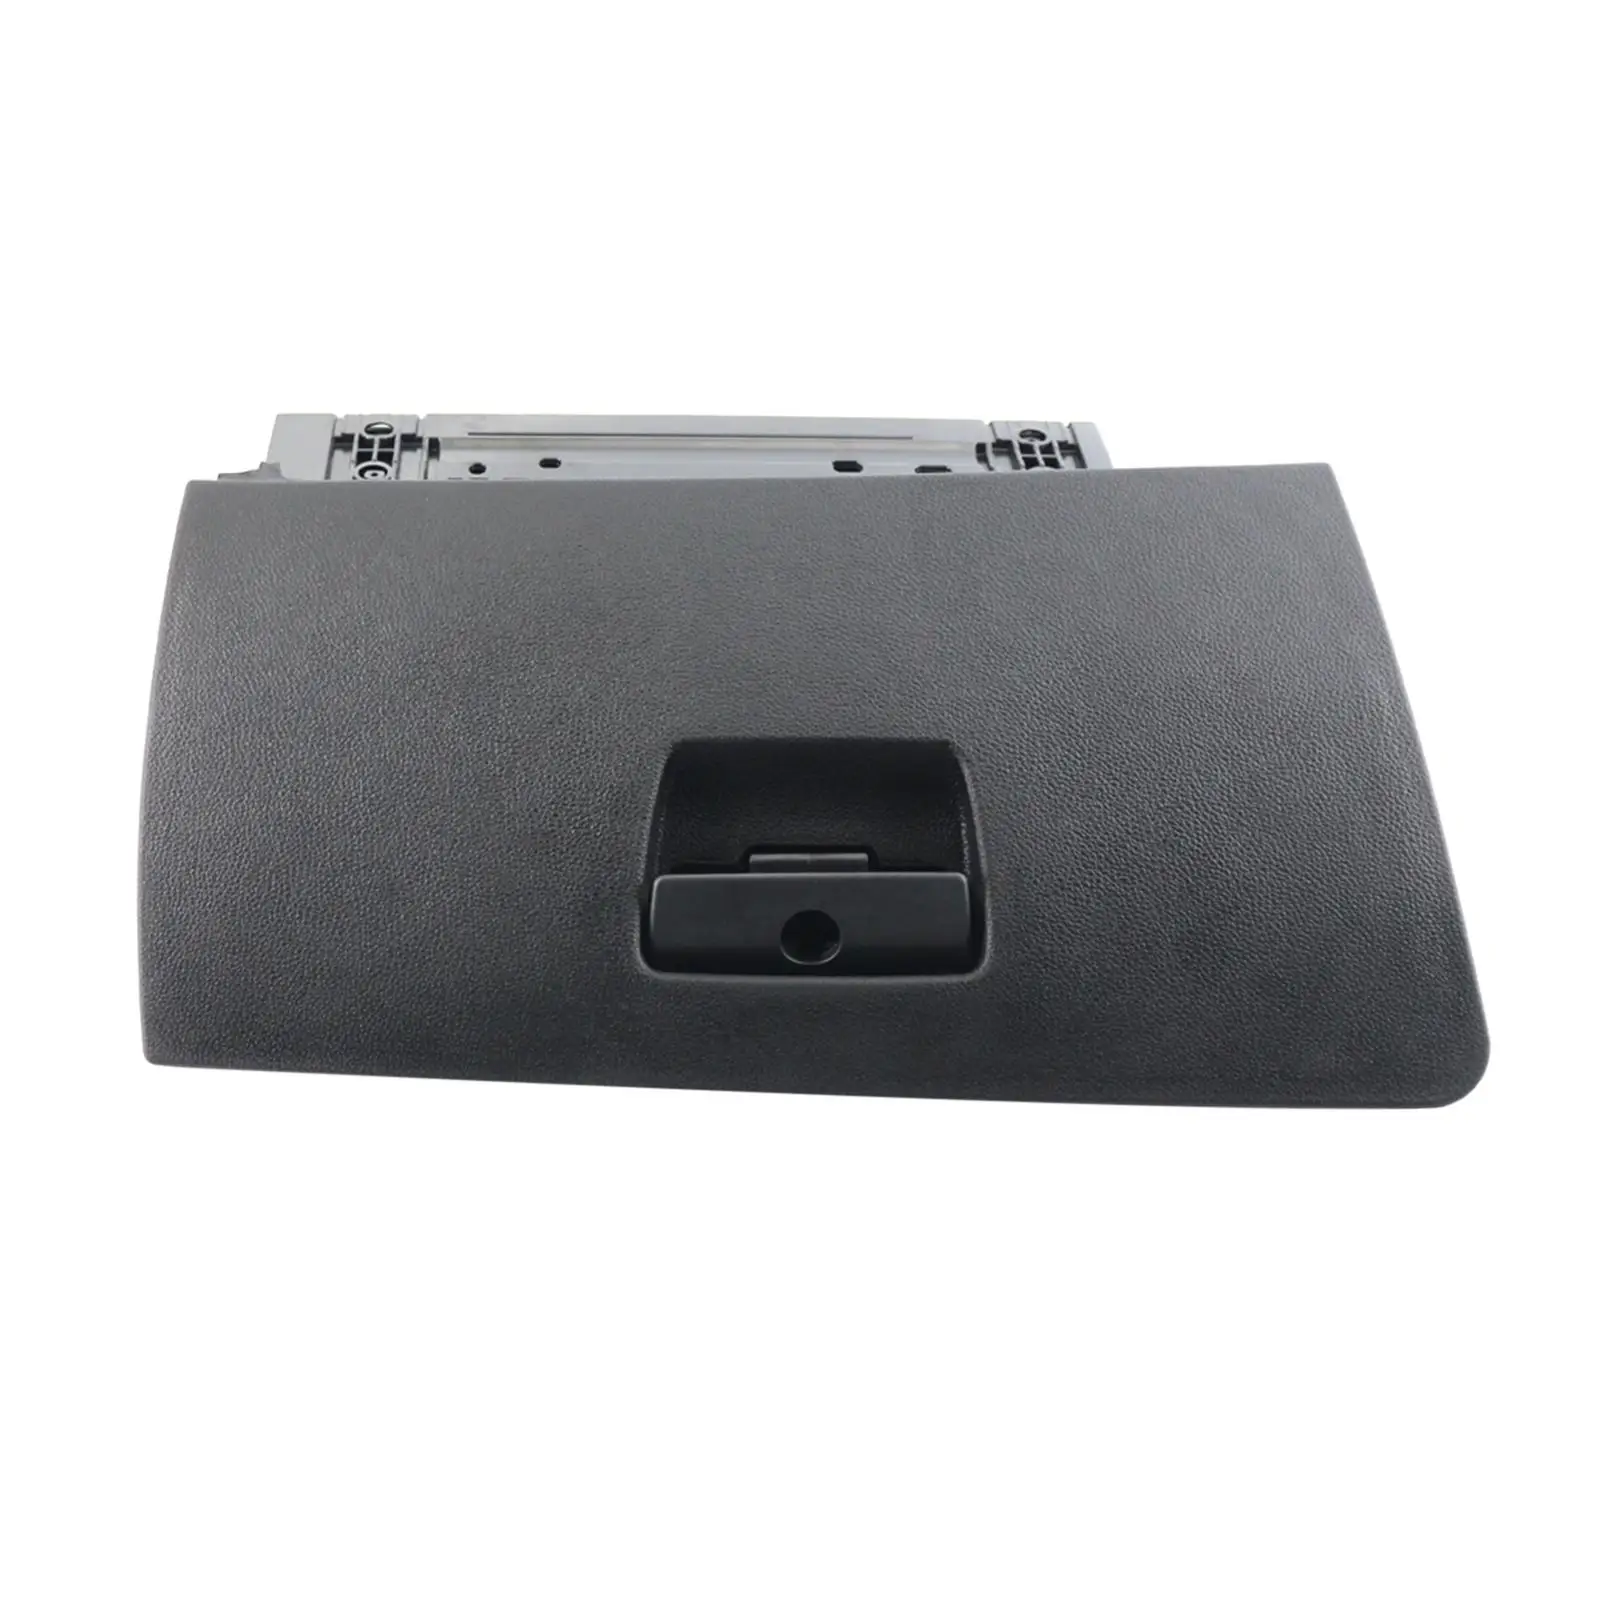 Glovebox Replaces Accessory Durable Professional Portable Parts Glove Box Storage Compartment for BMW E90 D91 E92 06-13